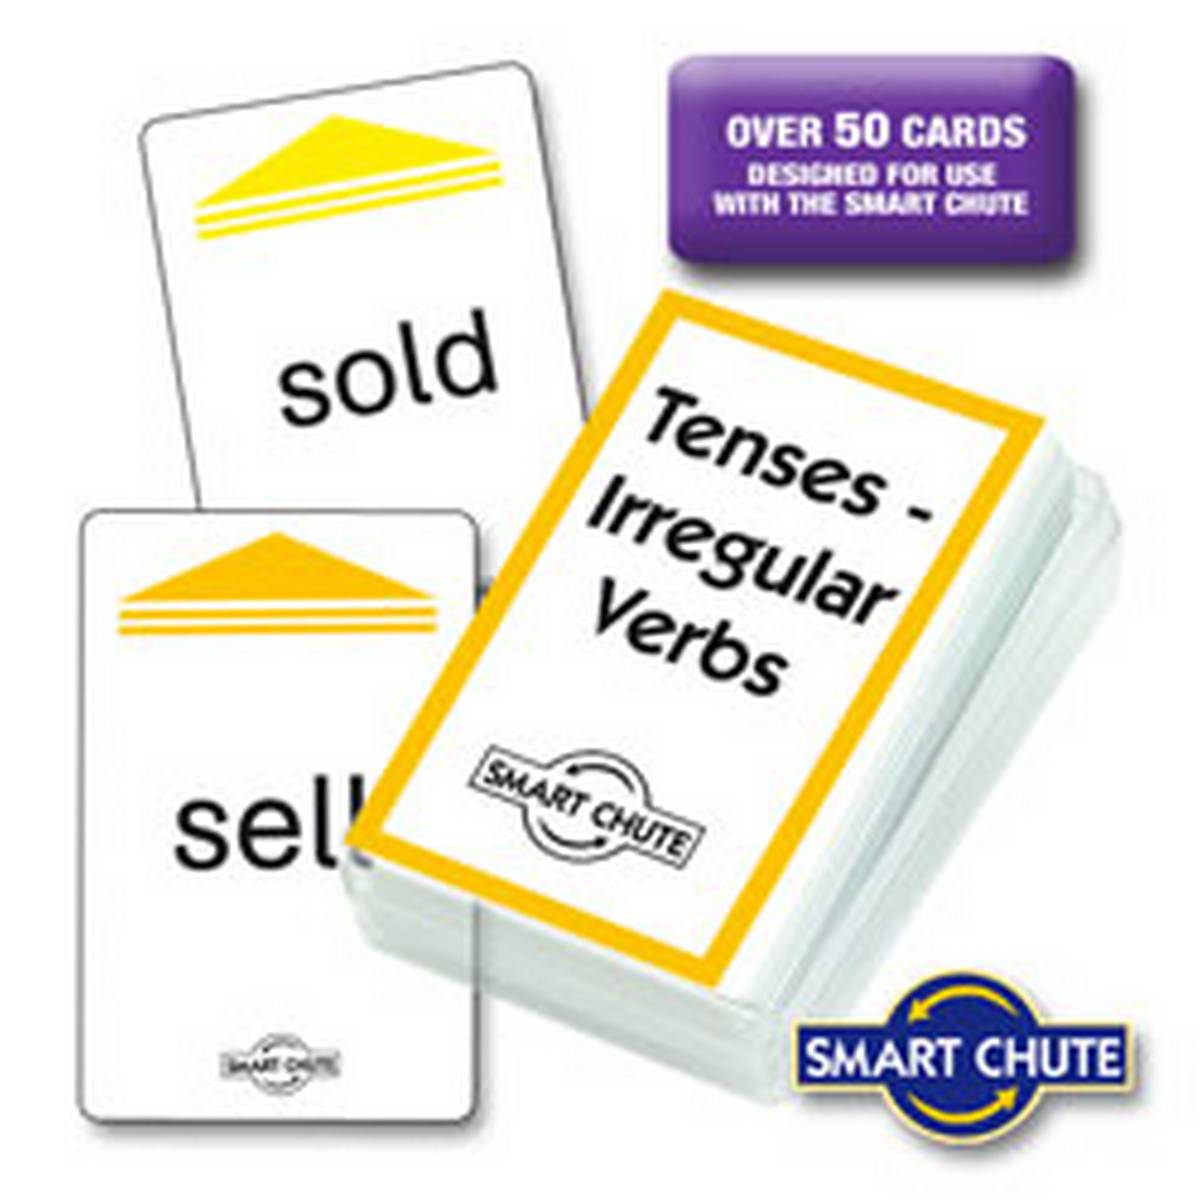 Tenses - Irregular Verbs Chute Cards